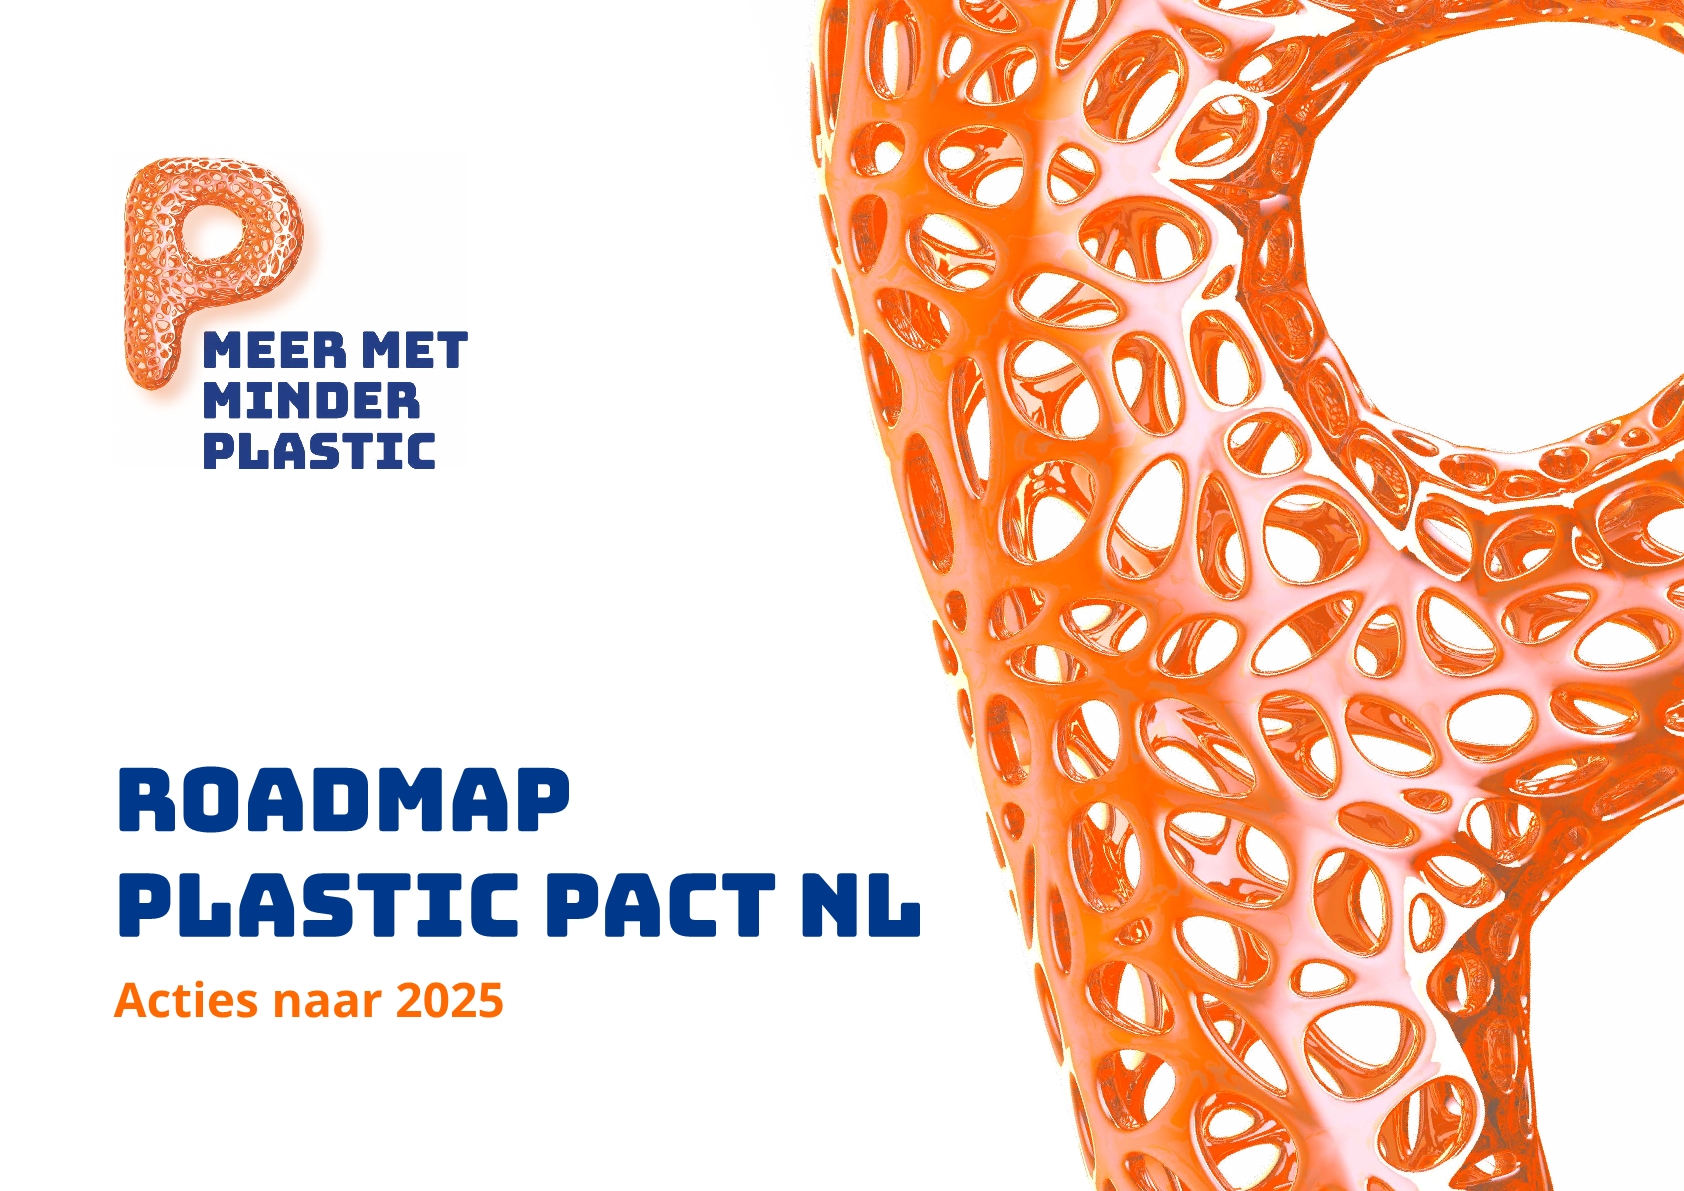 Roadmap Plastic Pact NL